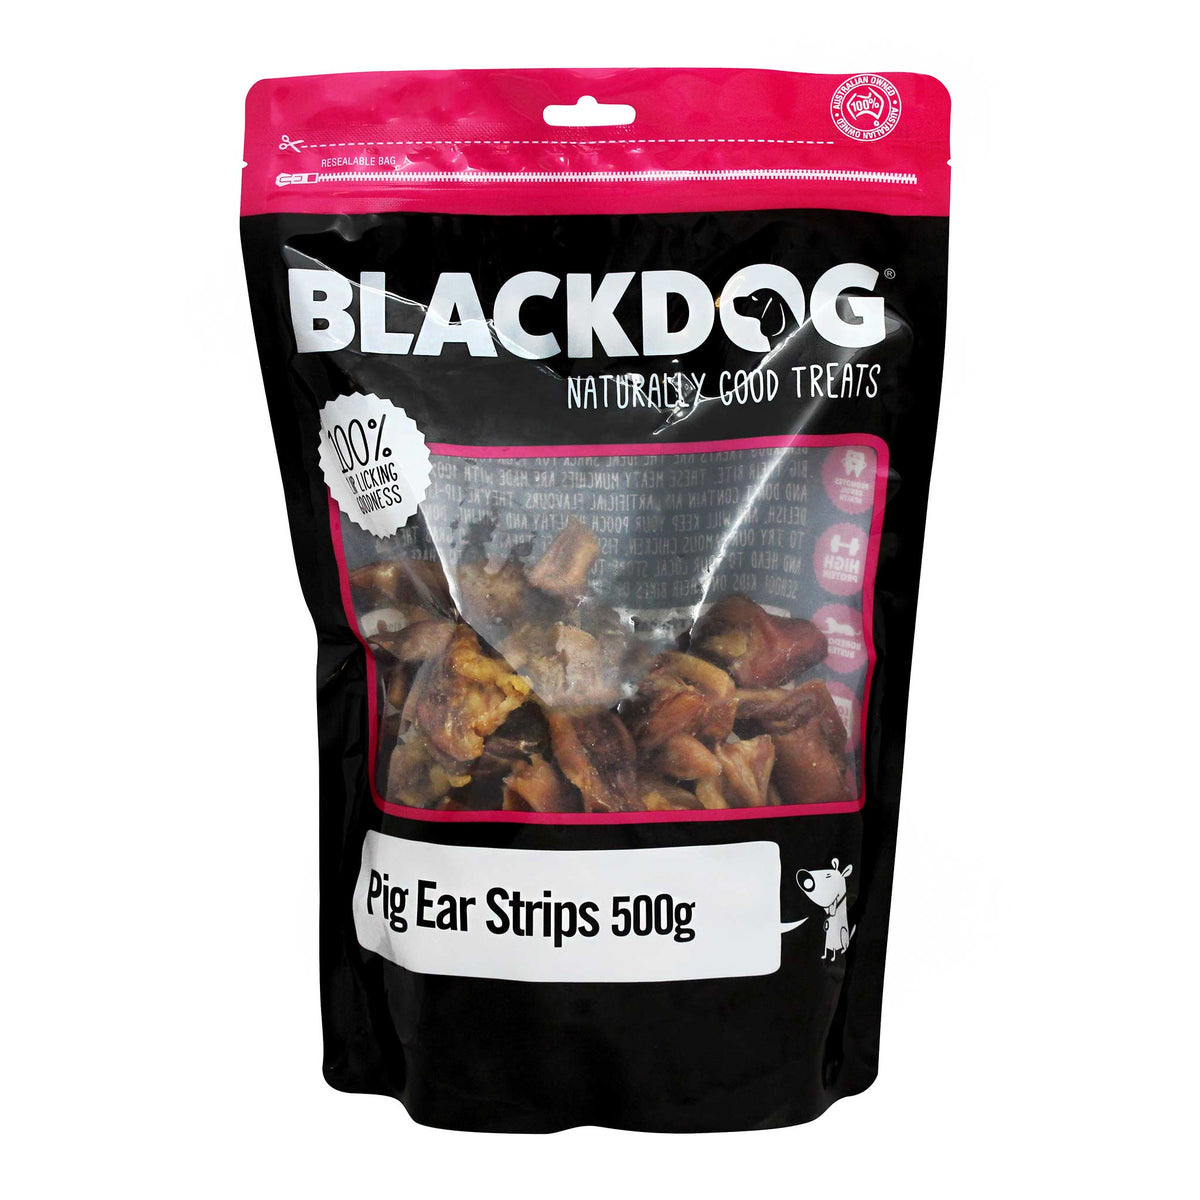 Black Dog Pig Ear Strips 500g